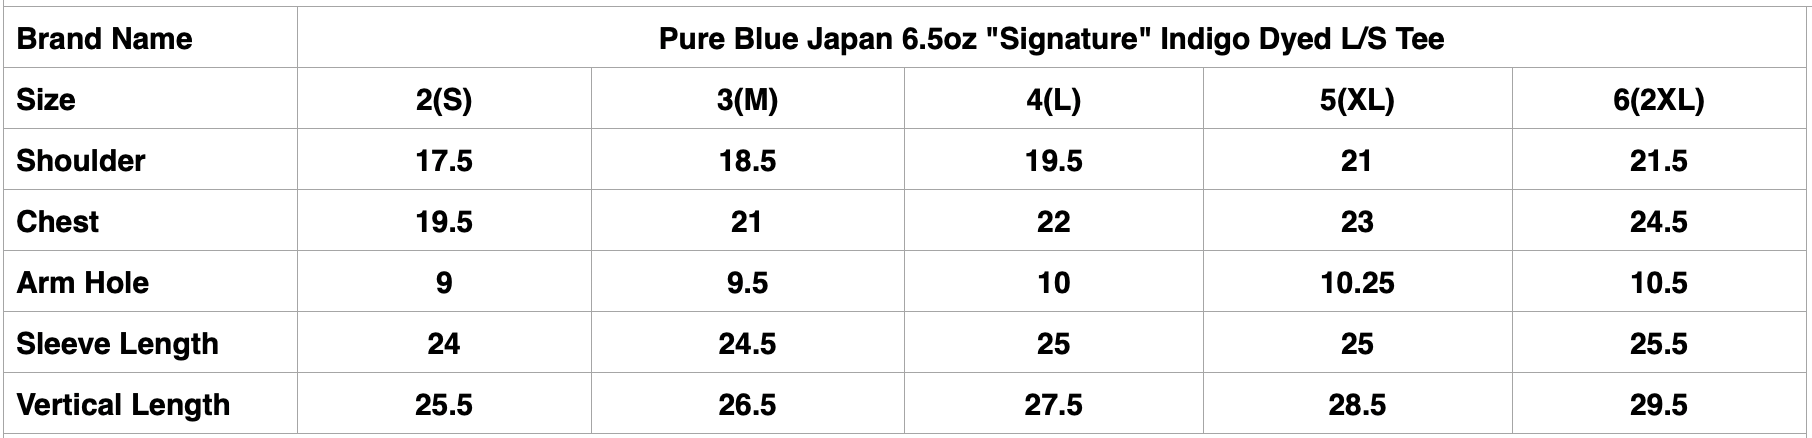 Pure Blue Japan 6.5oz "Signature" Indigo Dyed L/S Tee (Black X Indigo)